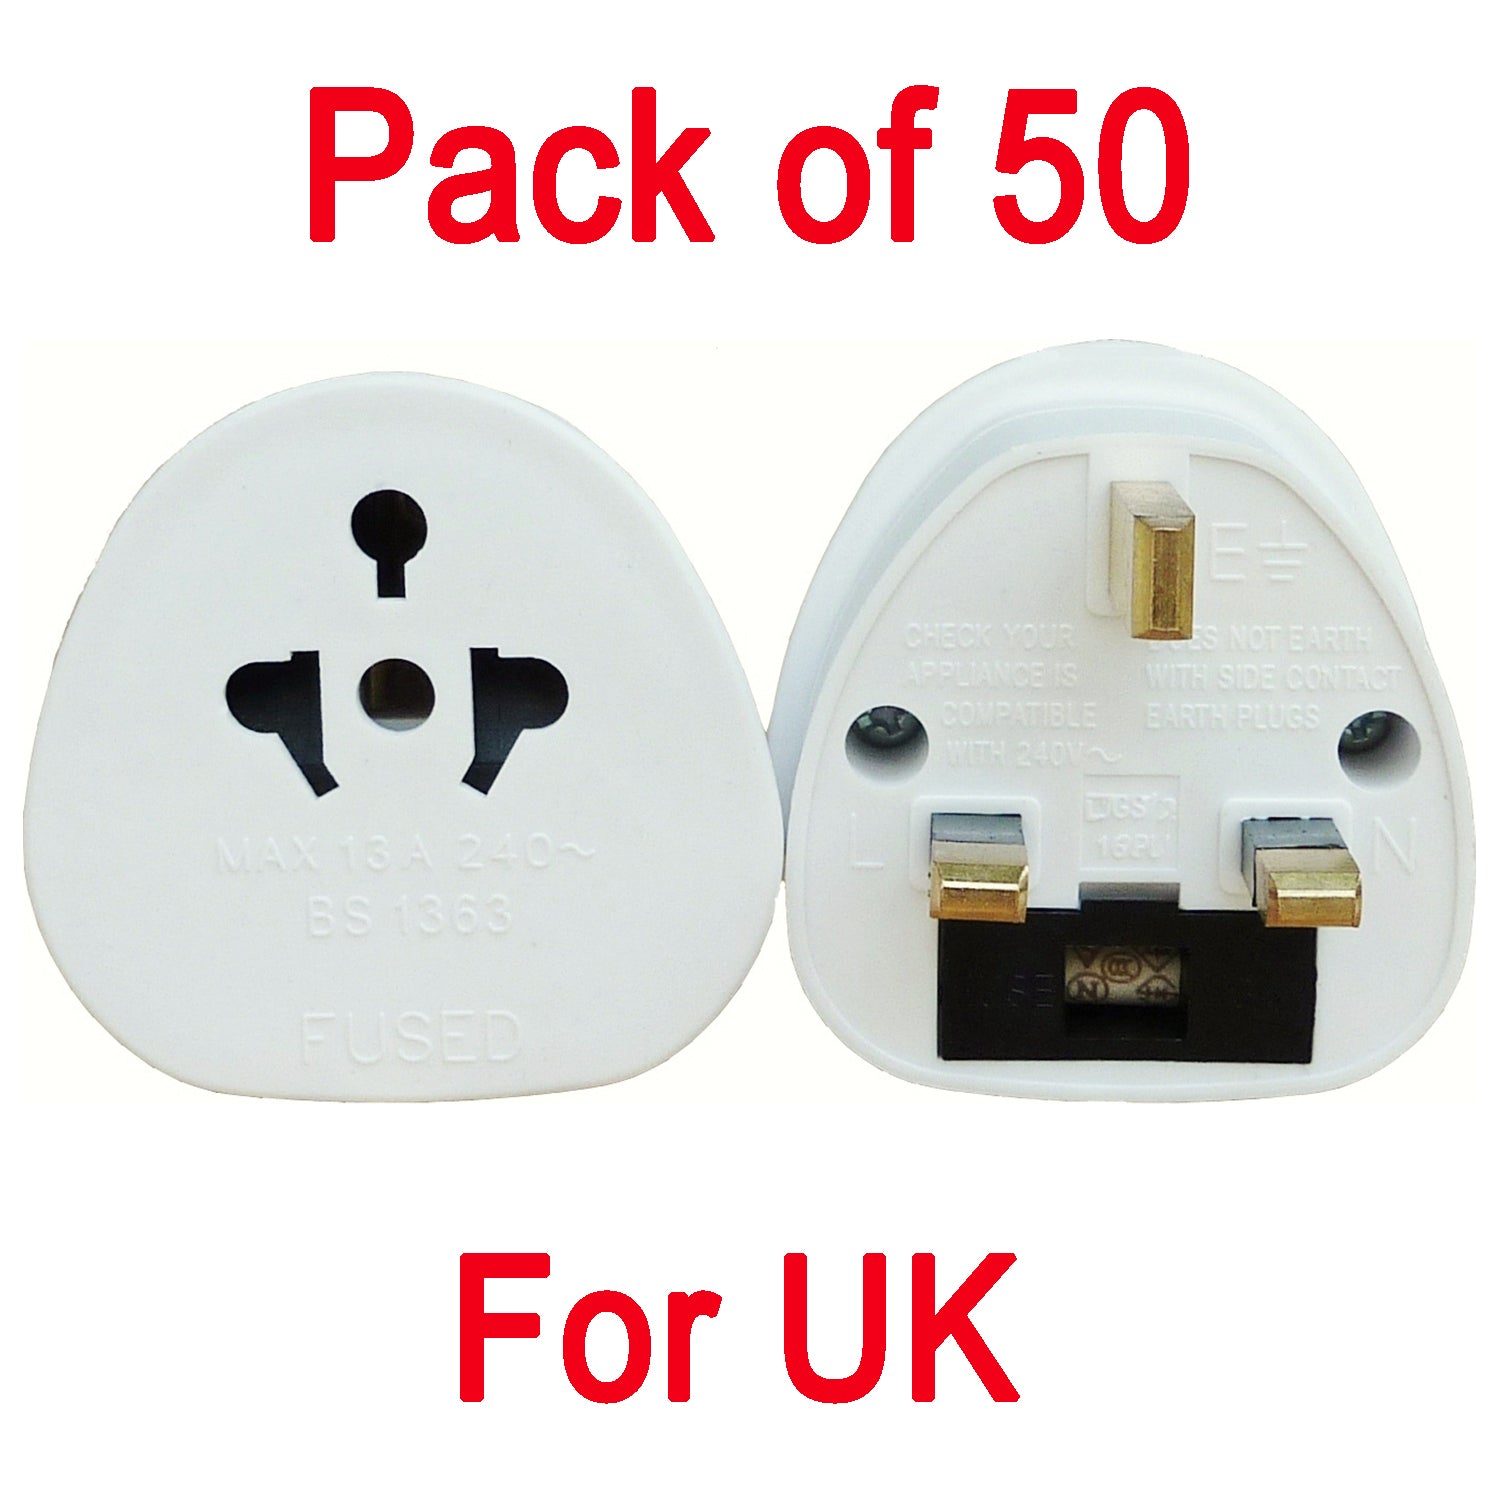 Whole sale UK travel adaptors for hotels